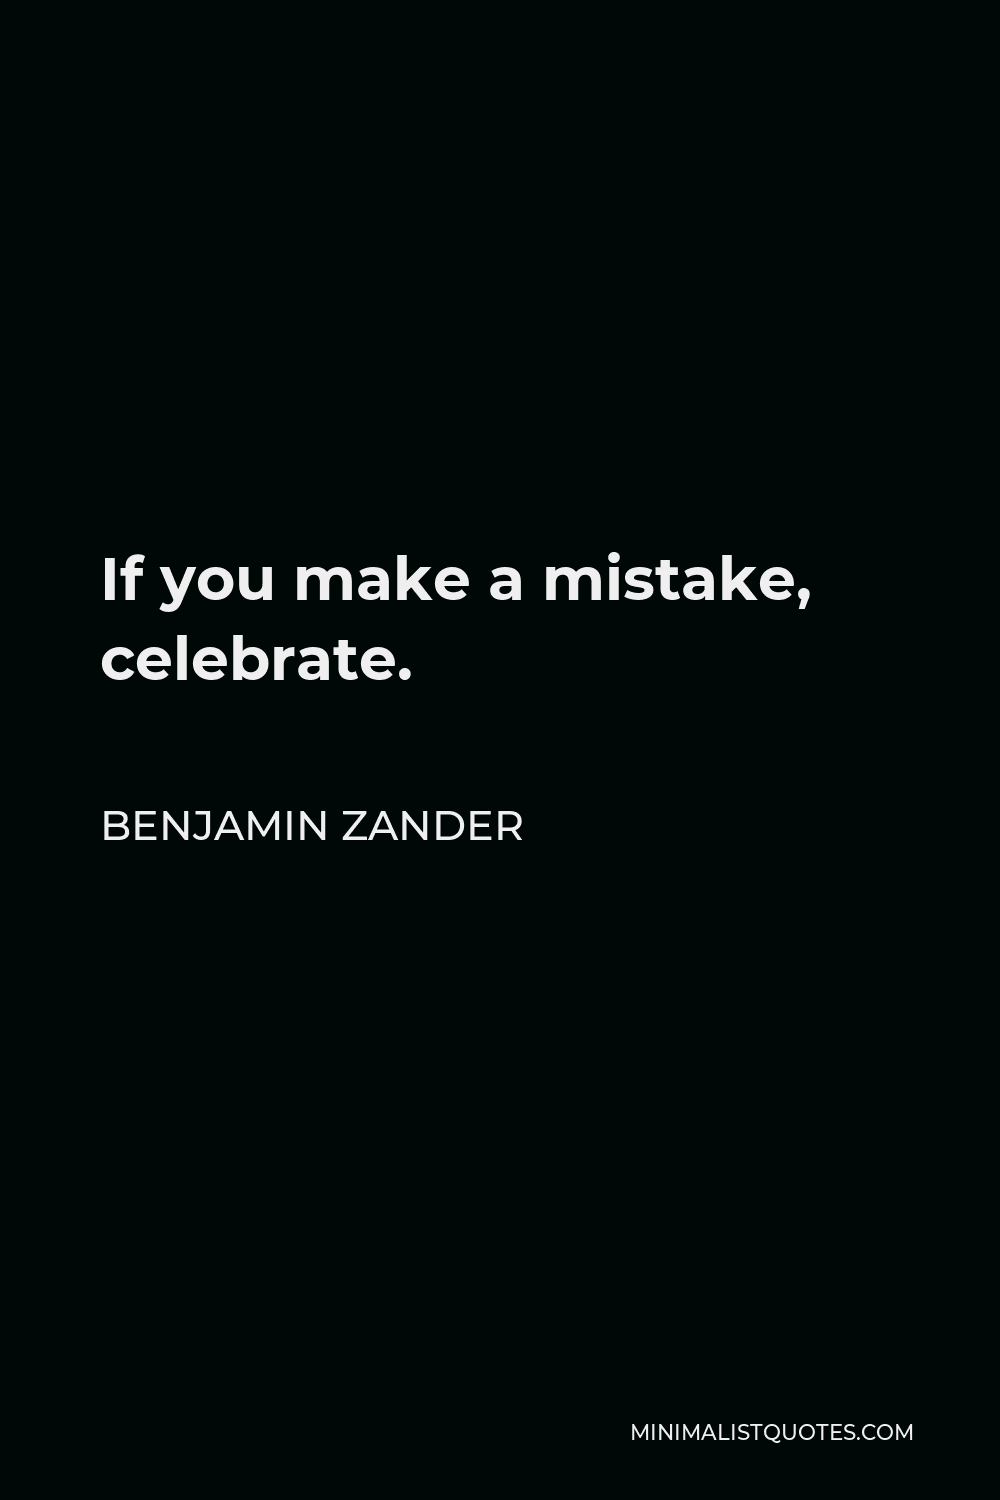 Benjamin Zander Quote - If you make a mistake, celebrate.